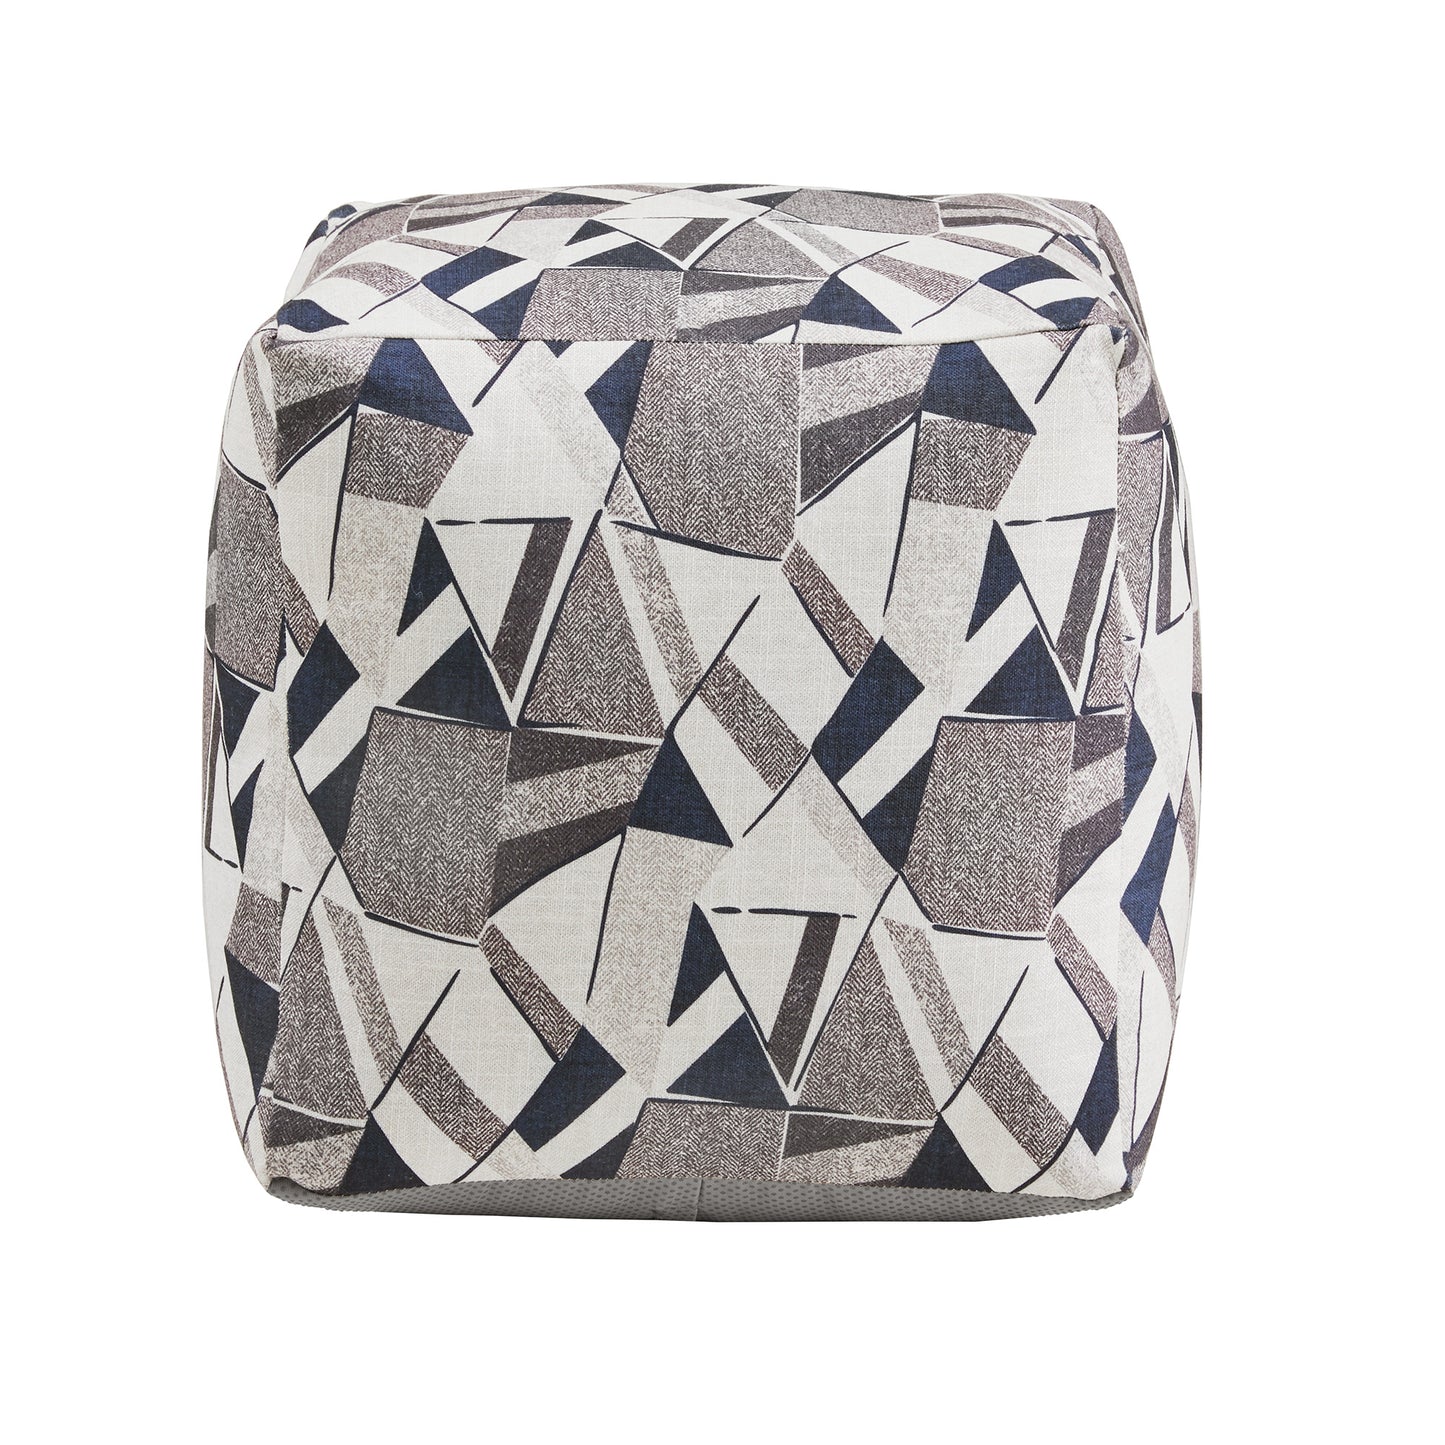 Upholstered Square Pouf Ottoman - Blue & Grey Tone Geometric Pattern Fabric